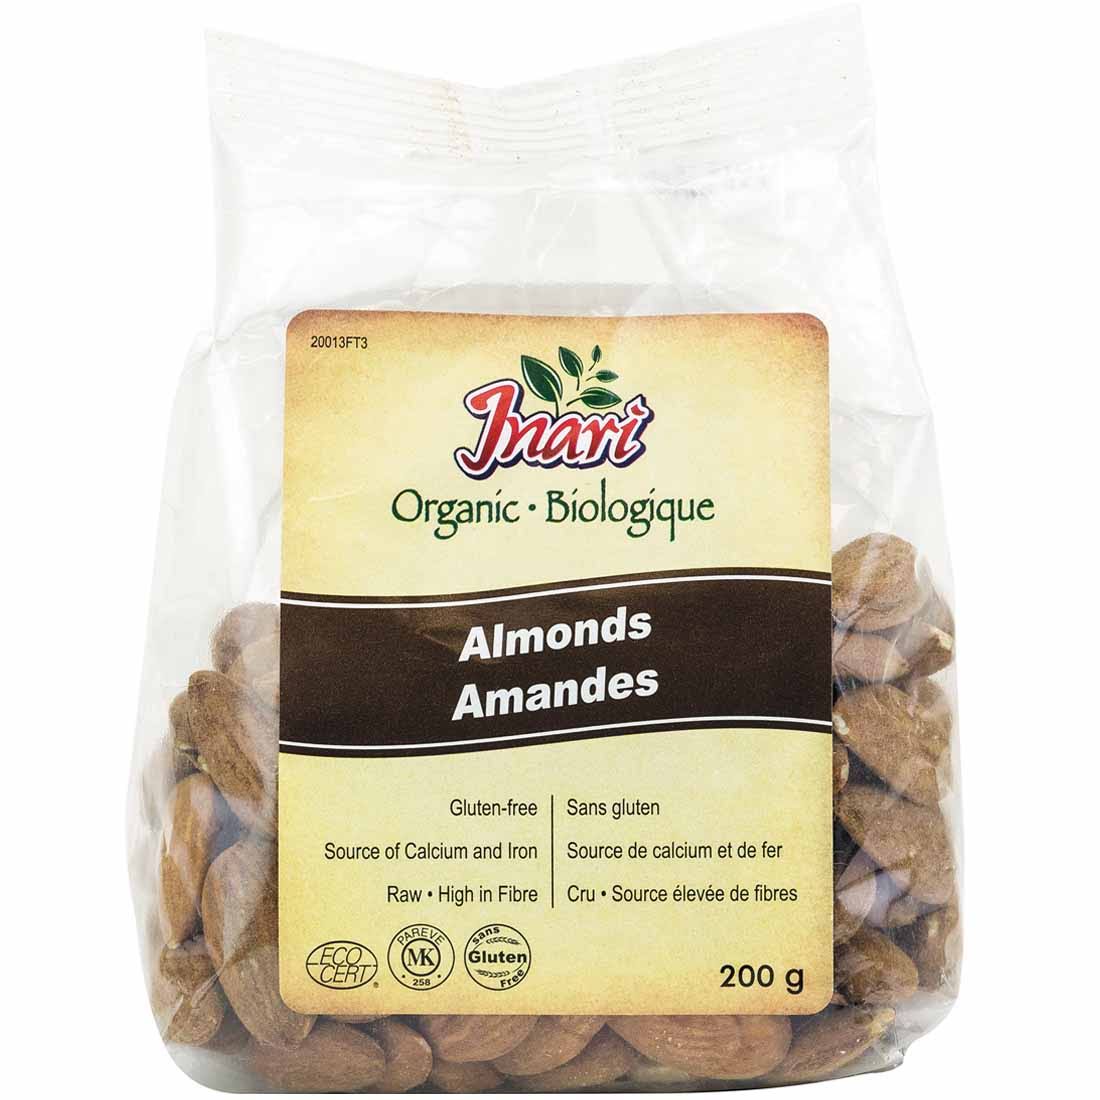 Inari Organic Whole Almonds